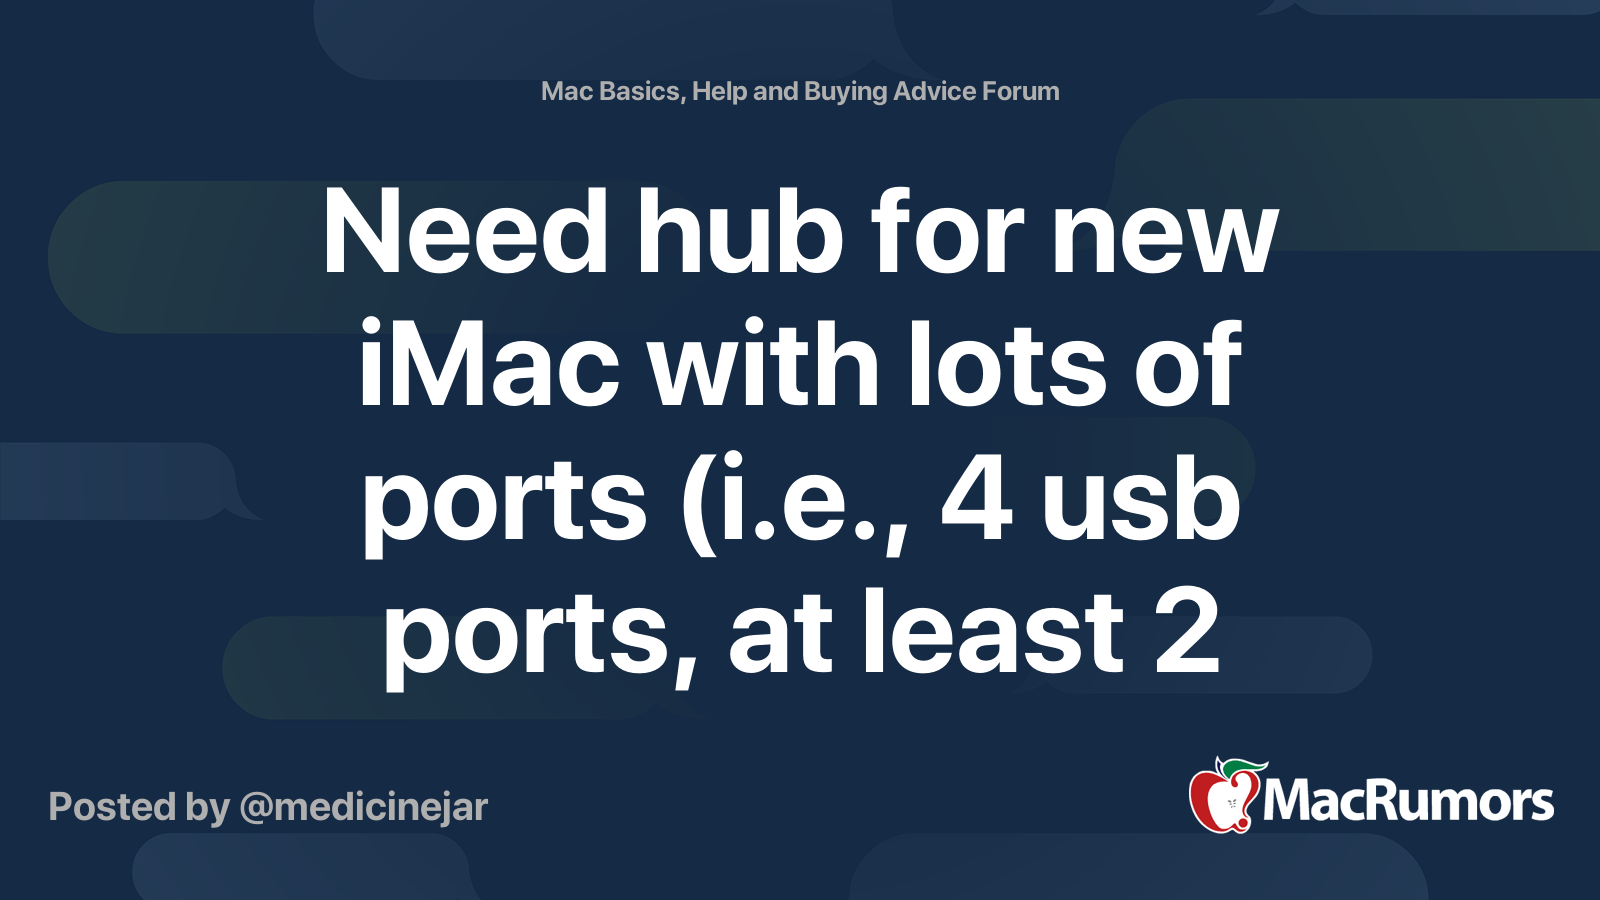 Minisopuru iMac Accessories for iMac 2021/2023, iMac USB Hub Support 10Gbps  NVMe SATA SSD, iMac Hub for M1/M3 with USB A/C 10Gbps, SD/TF, iMac USB